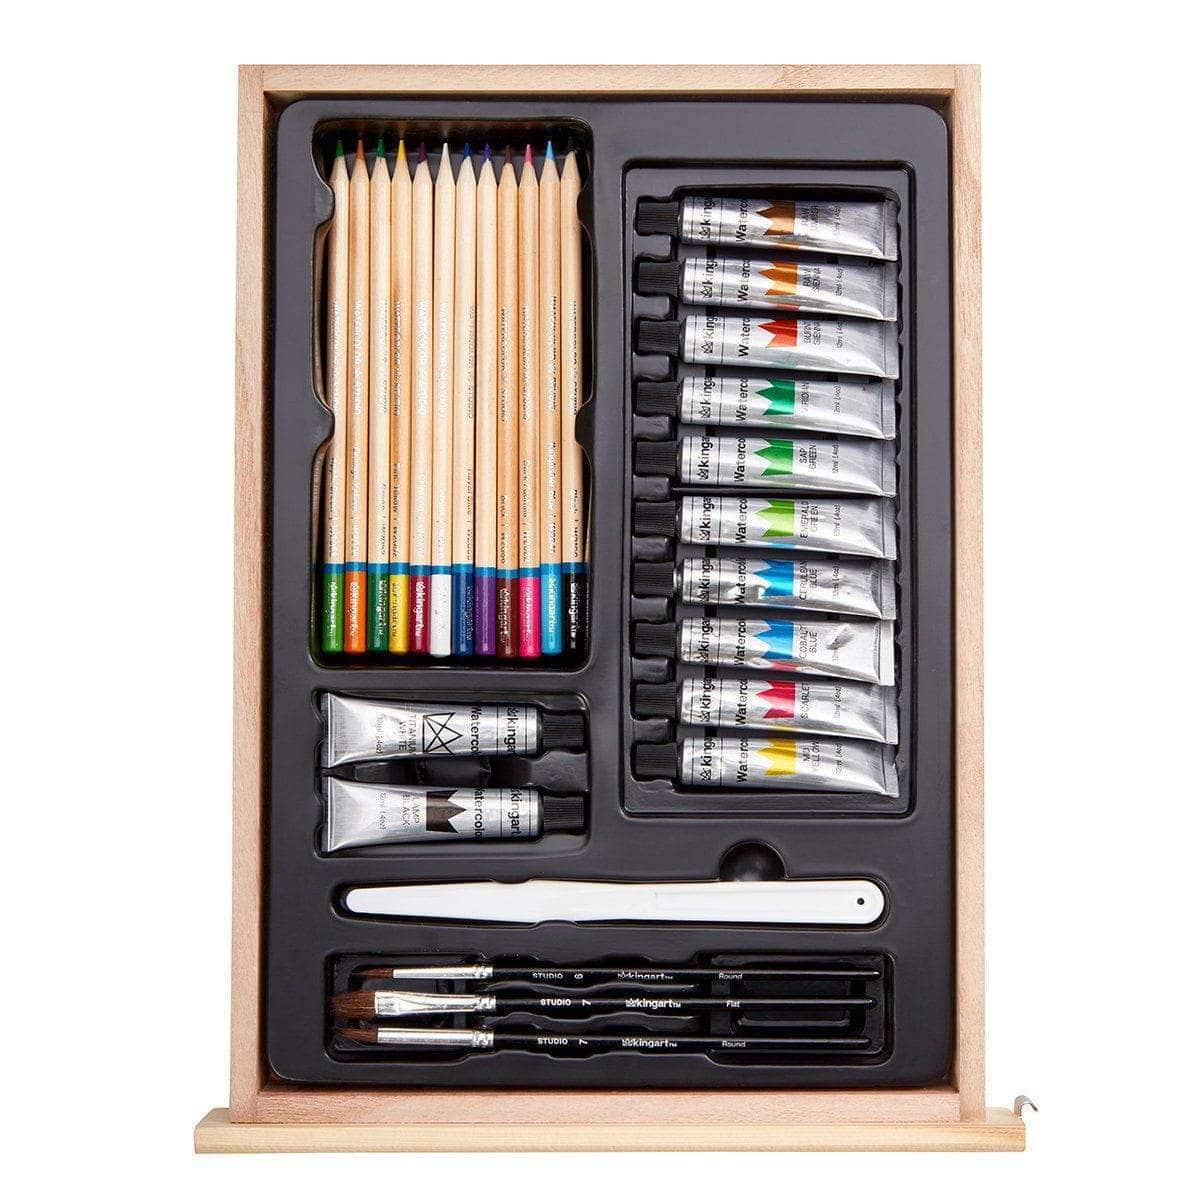 Kingart Pro Artist Sketch and Drawing Pencil Kit, Set of 26